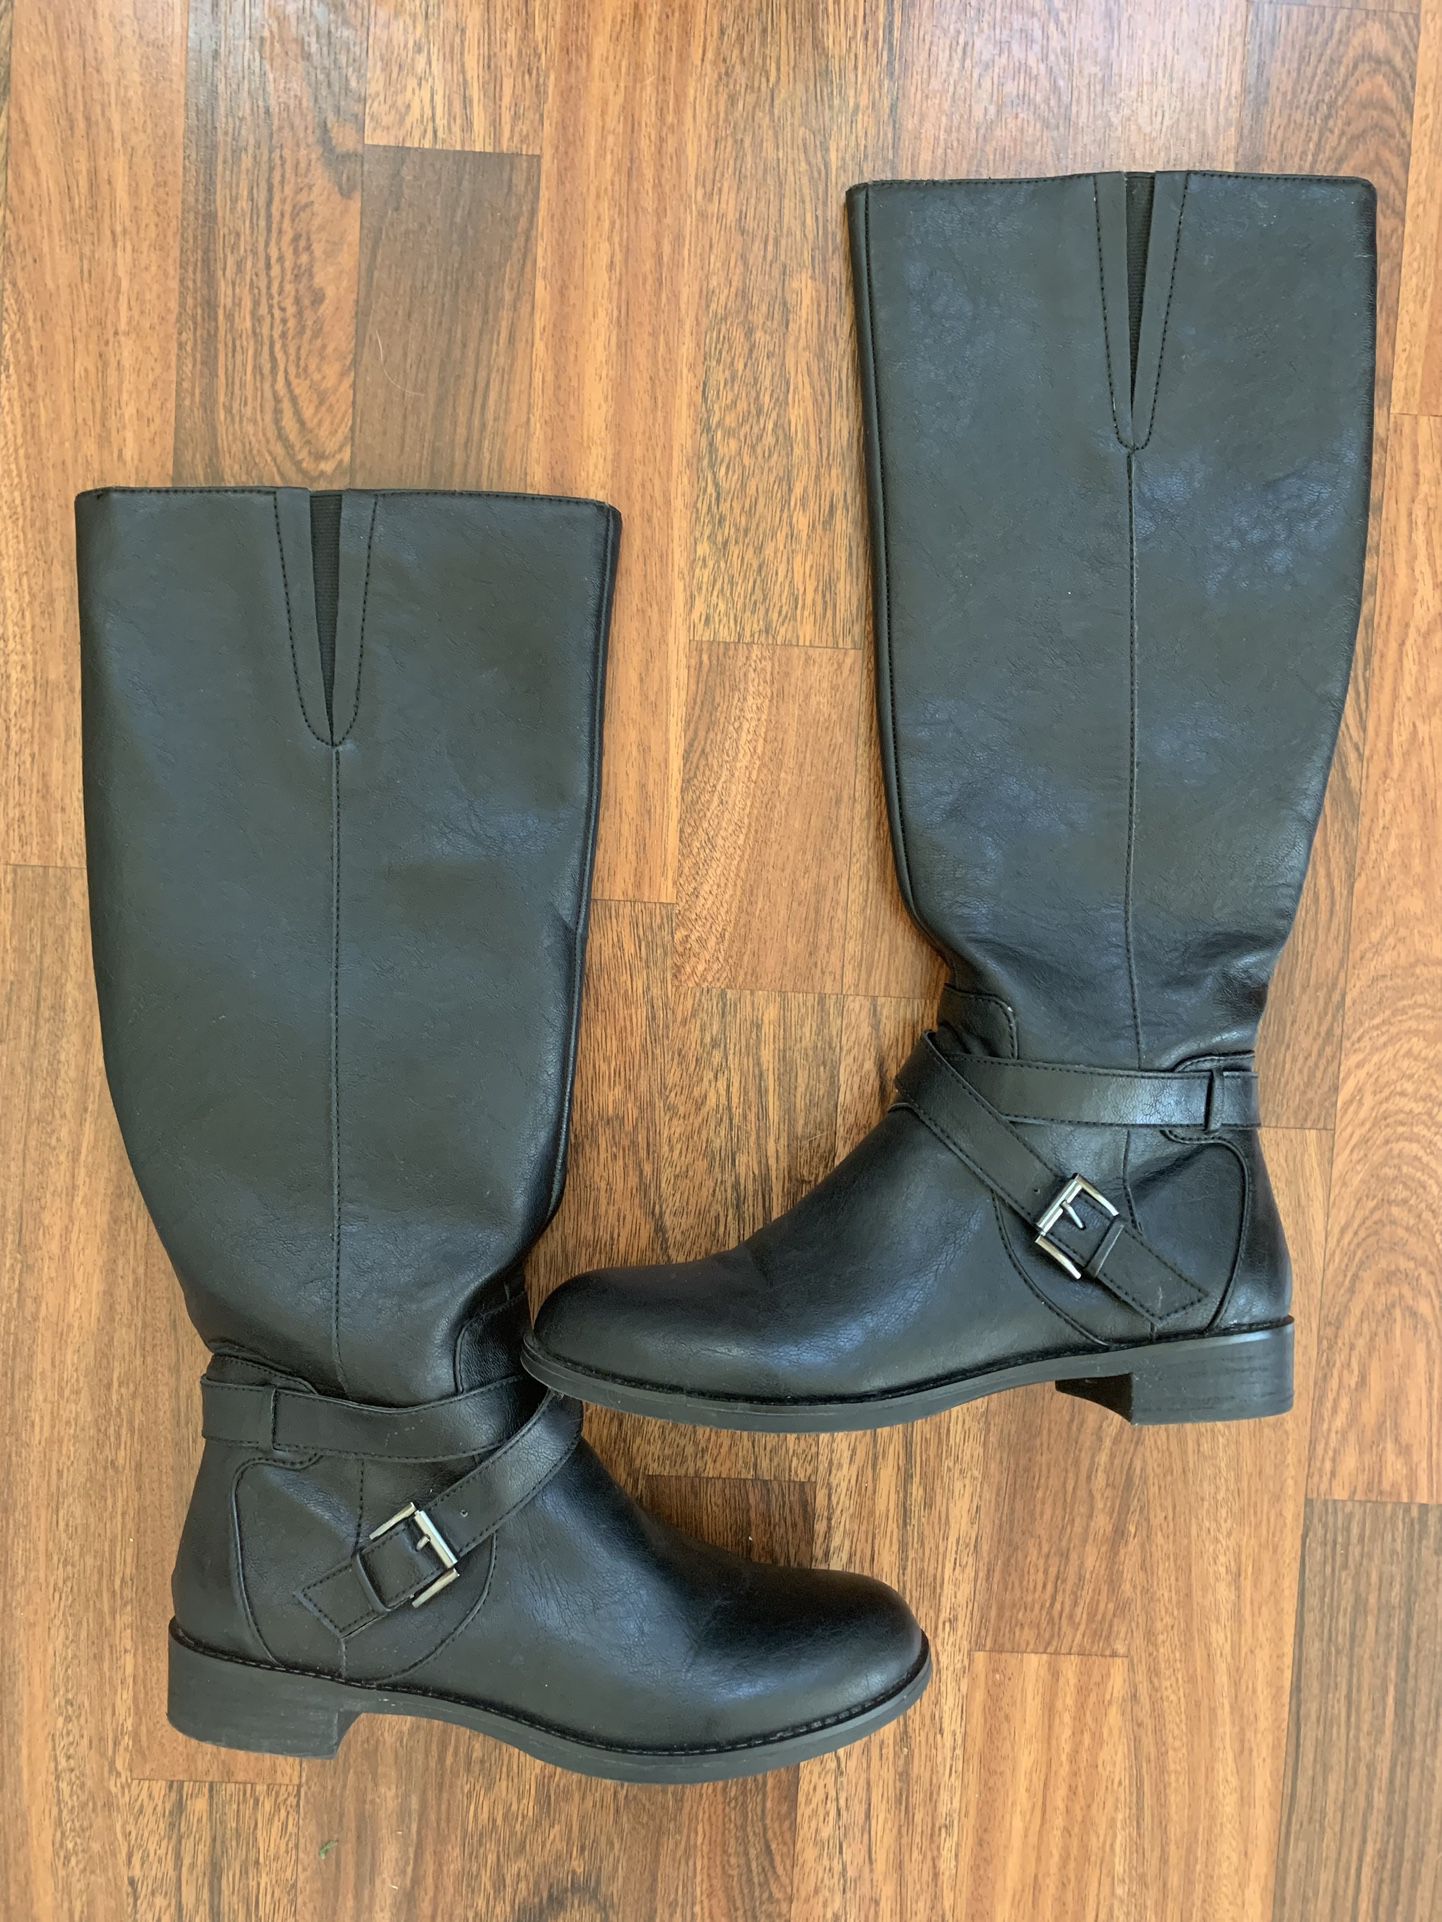 Kenneth Cole ladies’ sz 8.5 black vegan leather boots. Zip up